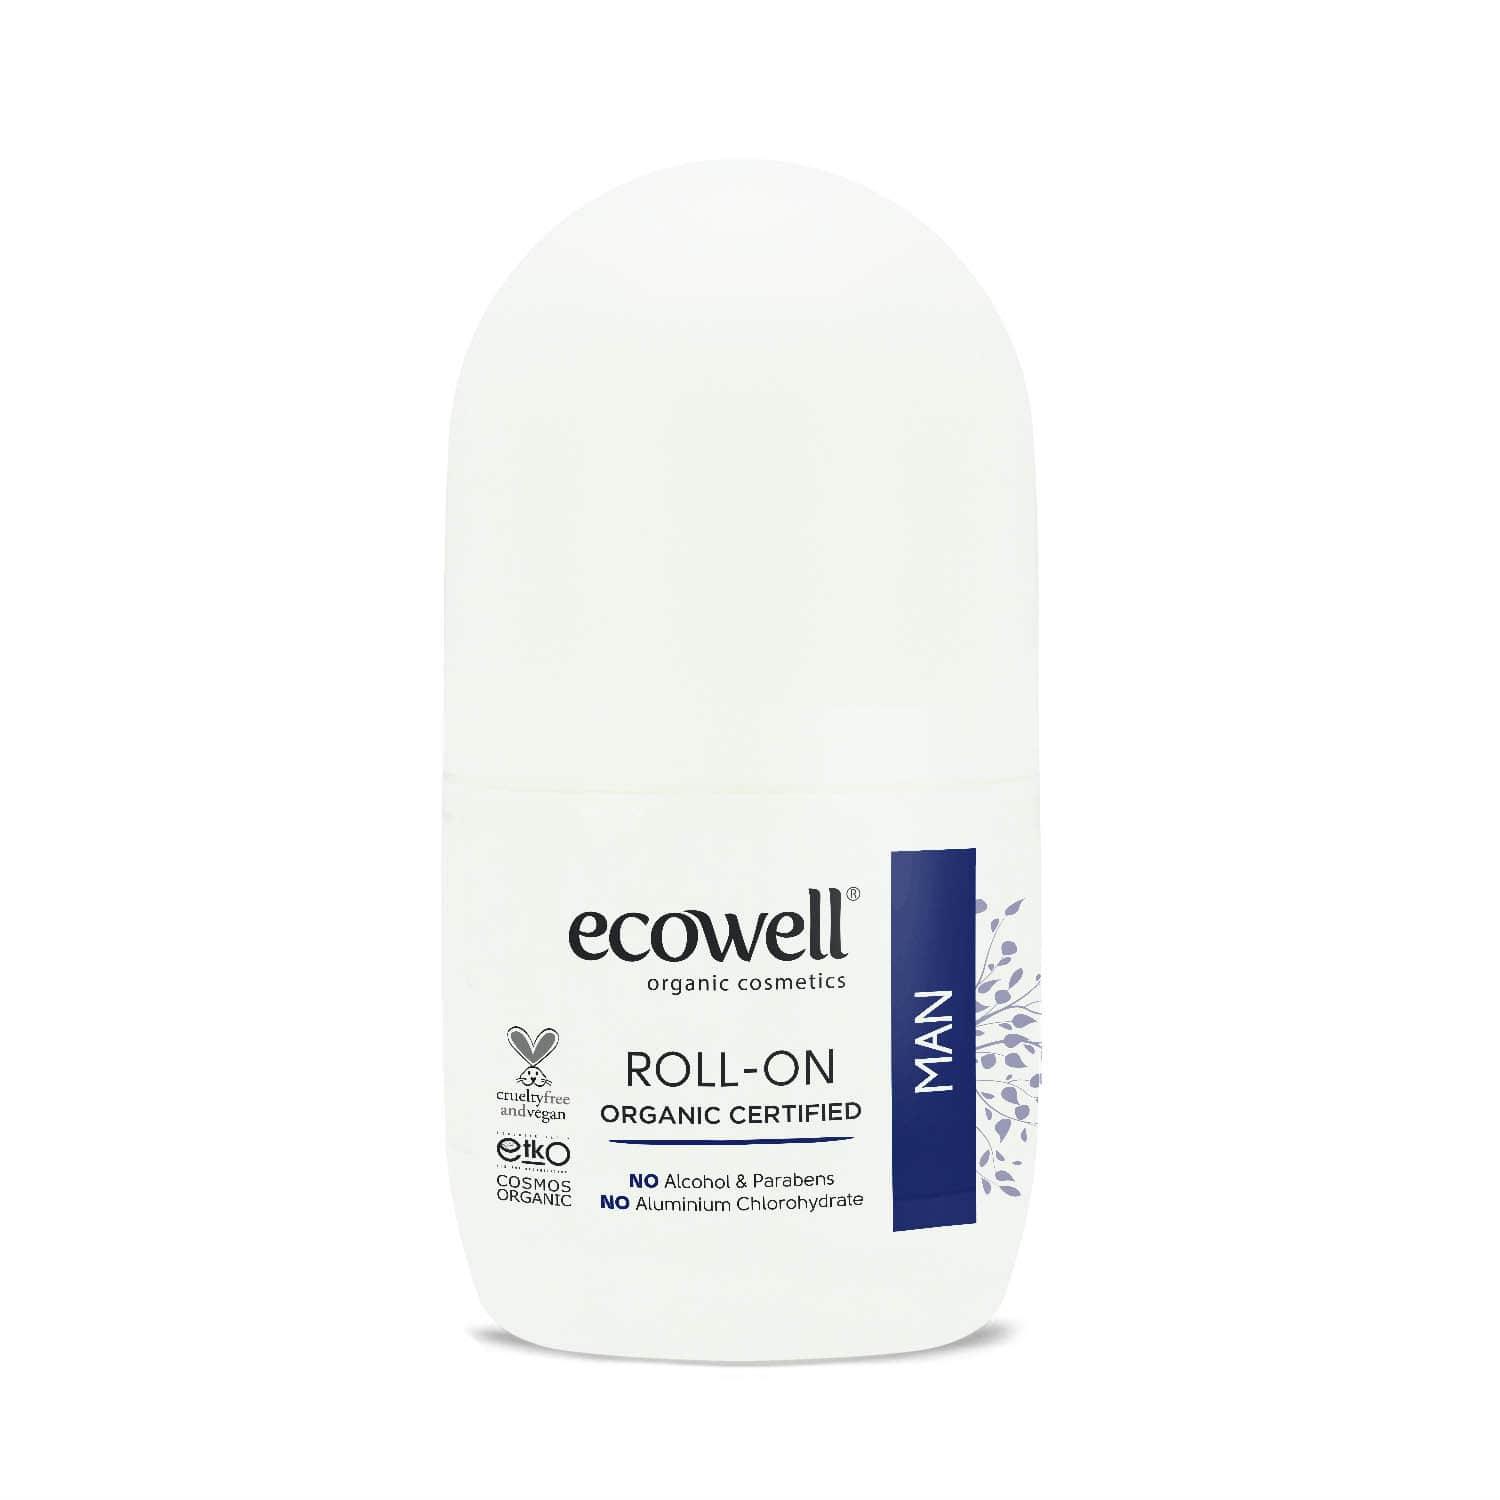 Ecowell Organik Roll-On Deodorant - Erkek (75 Ml)